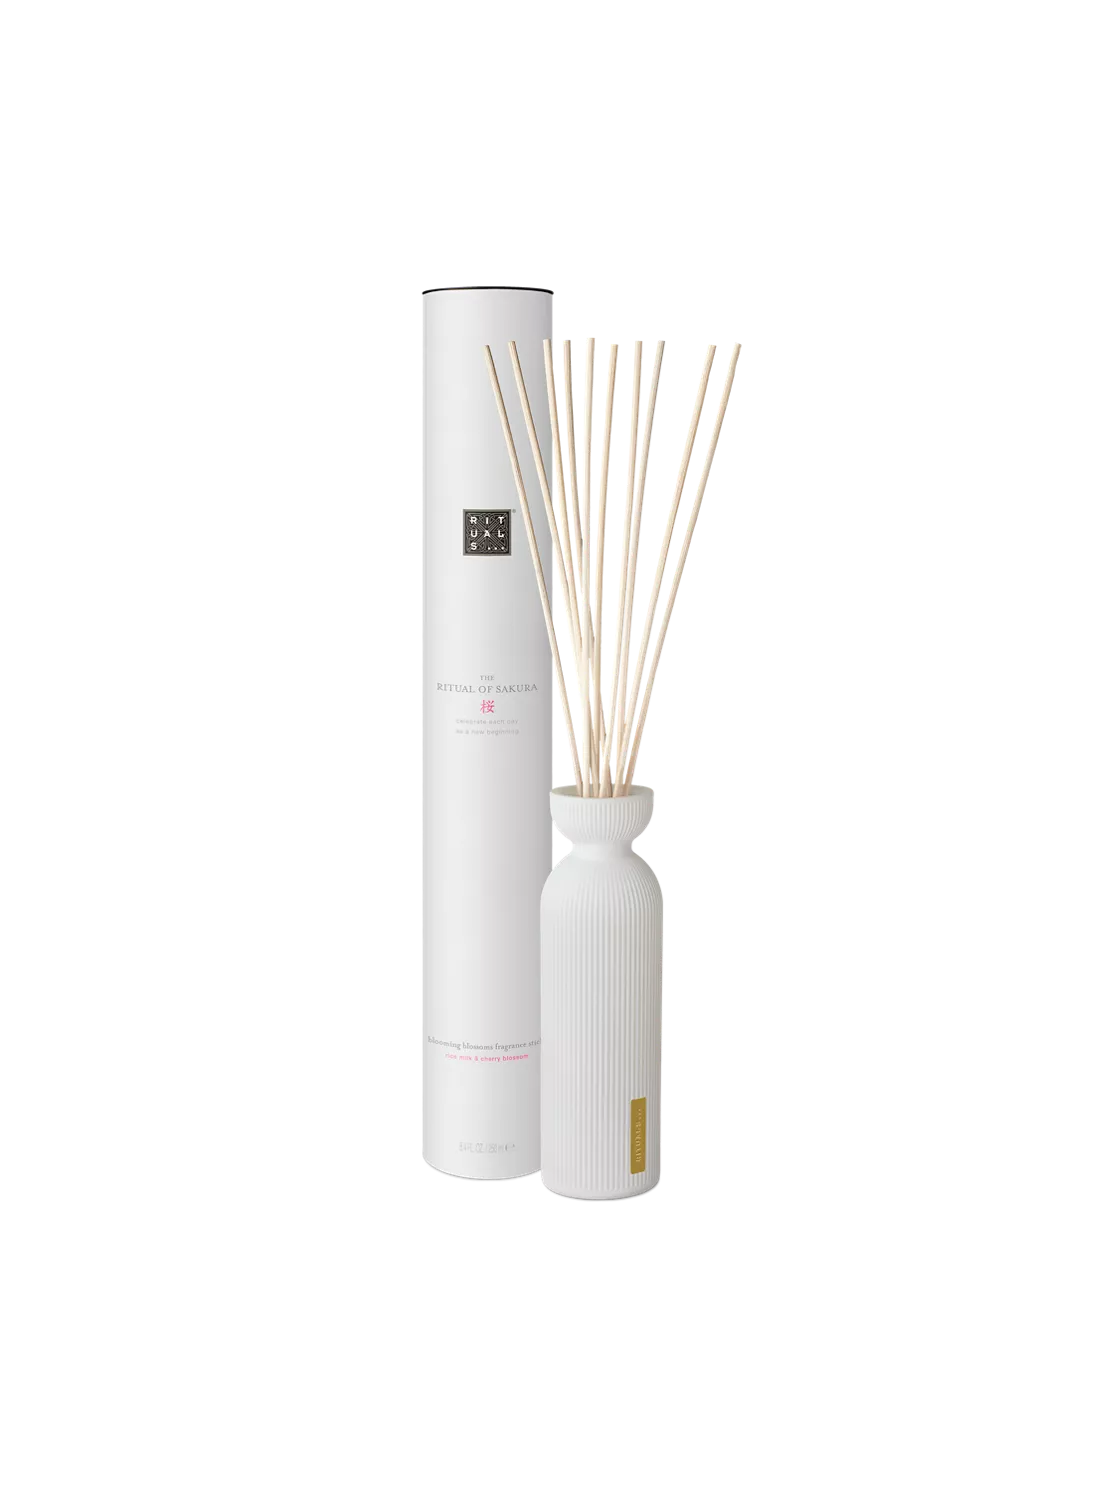 Rituals The Ritual of Sakura Mini Fragrance Sticks online kaufen